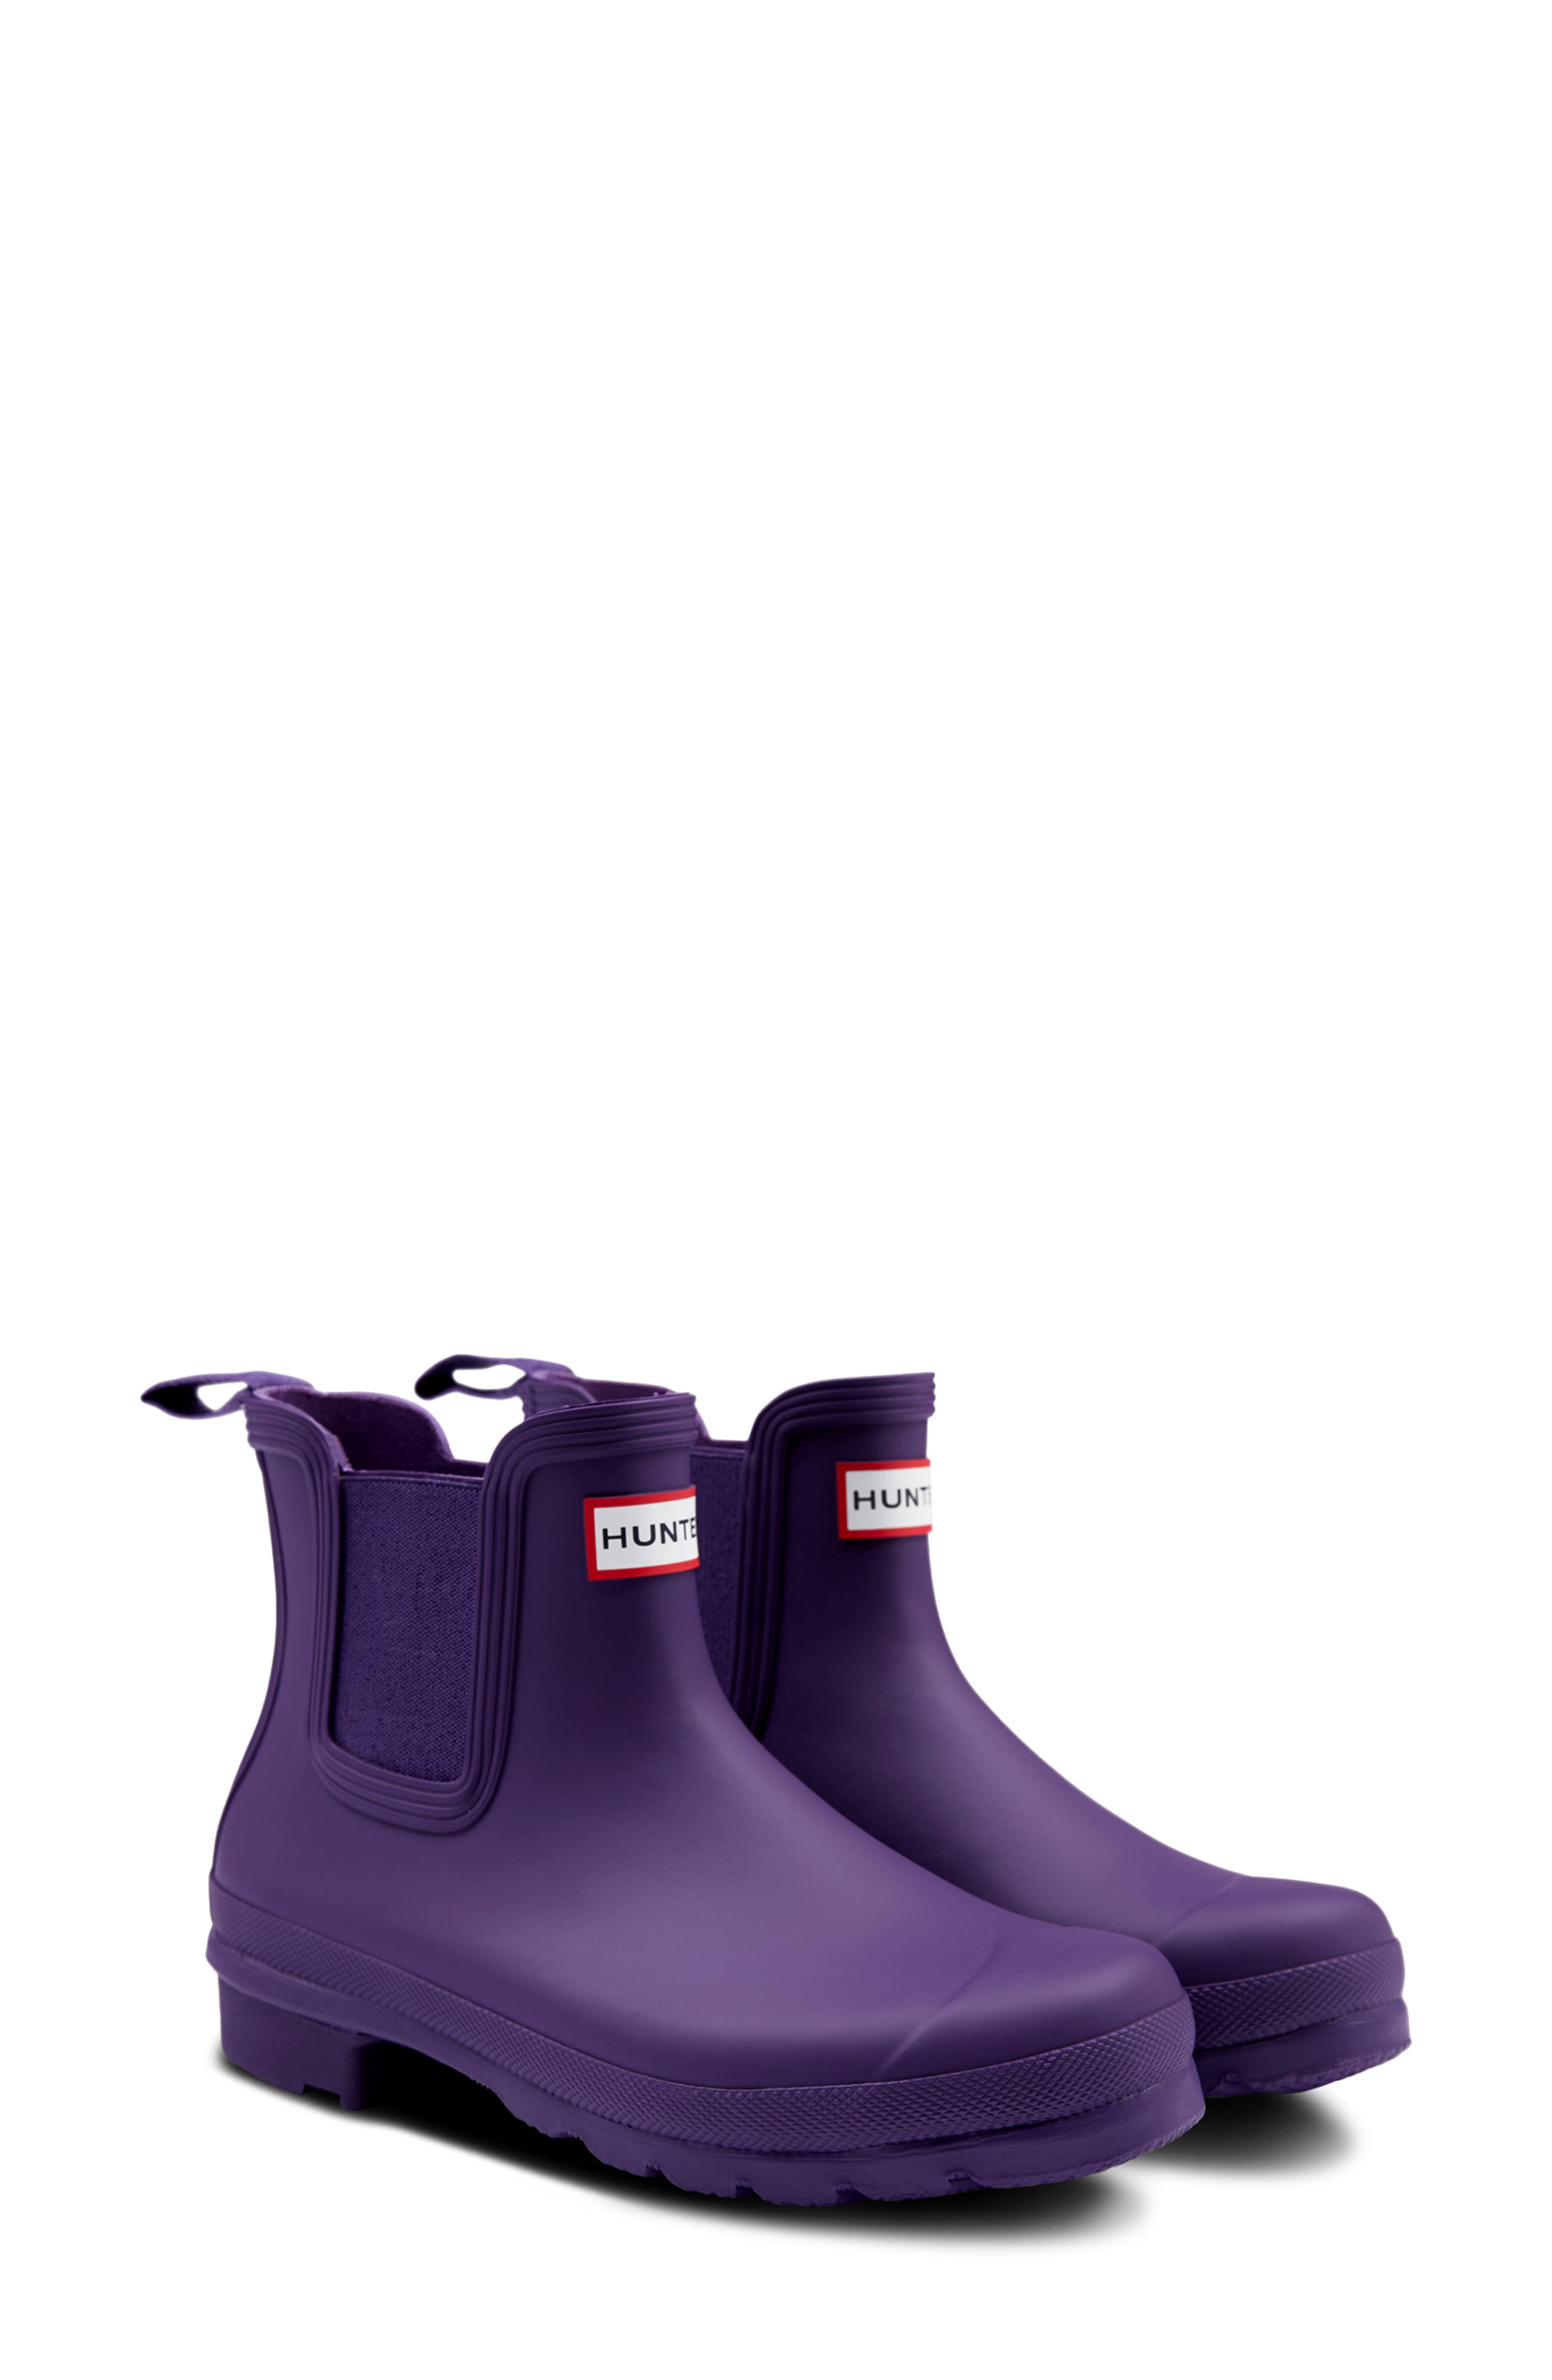 purple rain boots womens